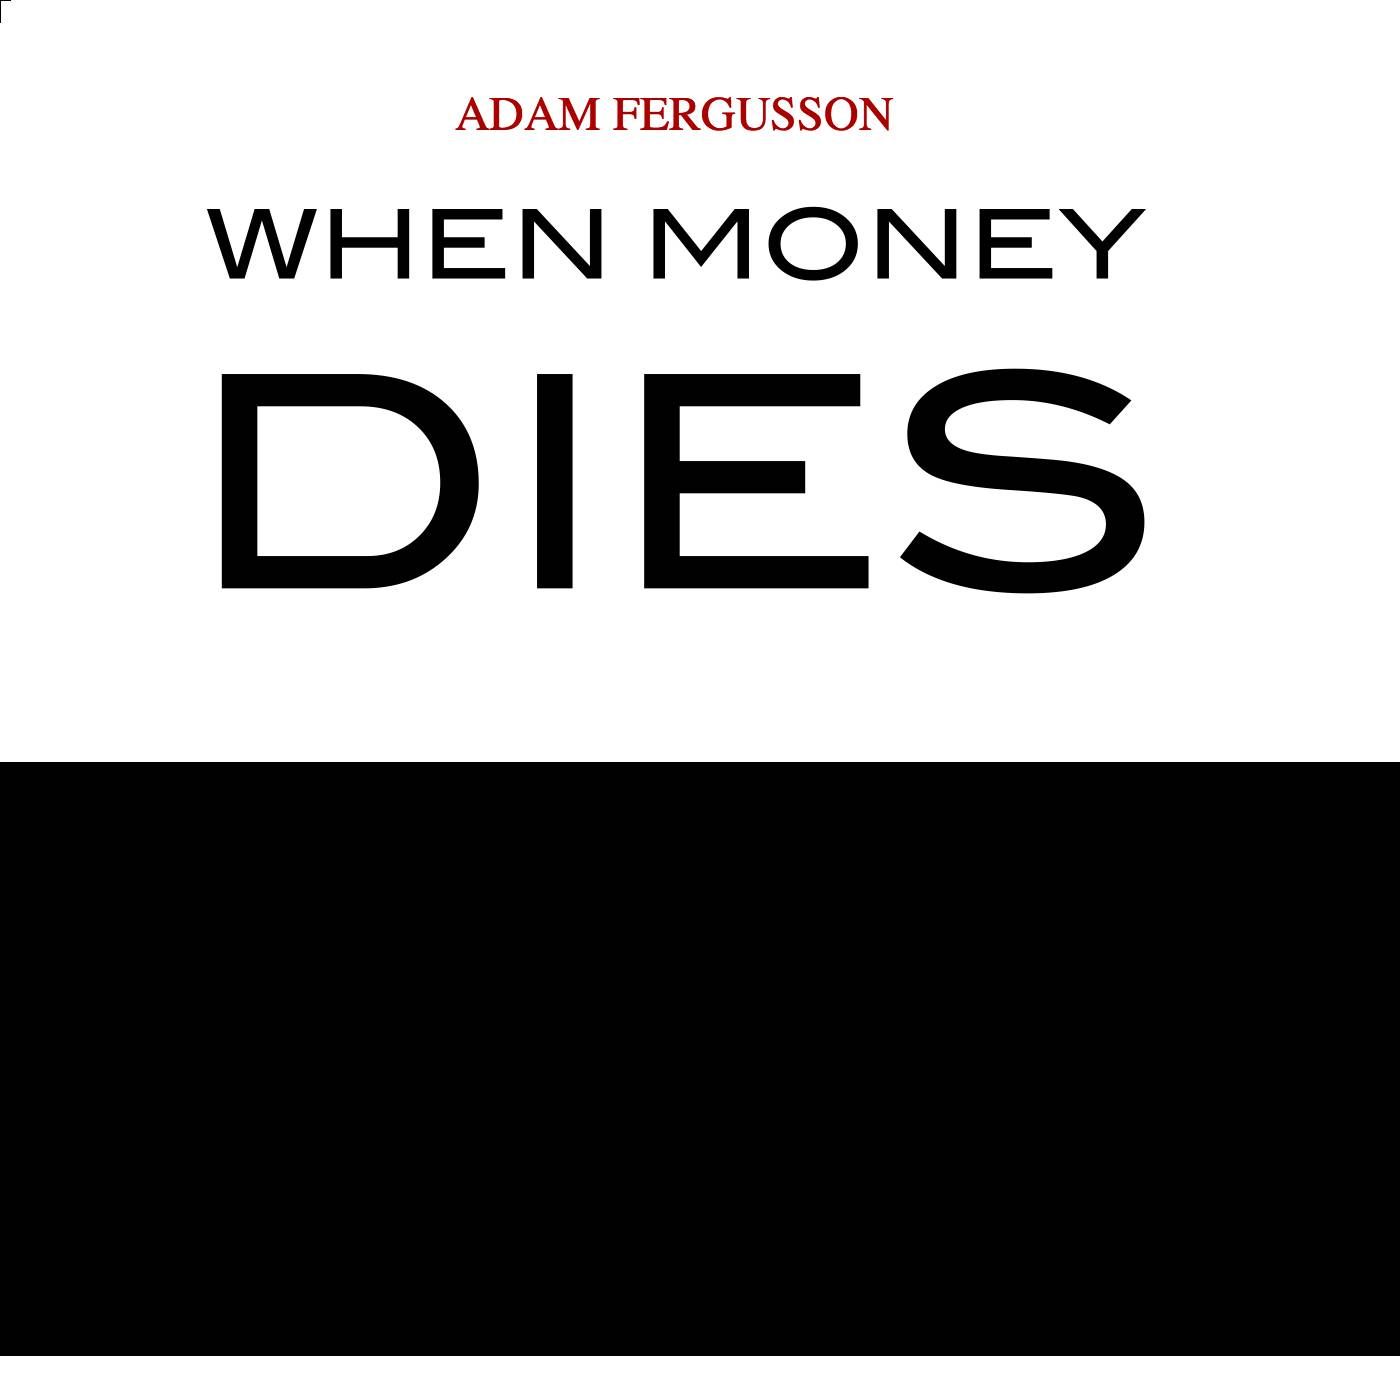 When Money Dies review of Adam Fergusson's book